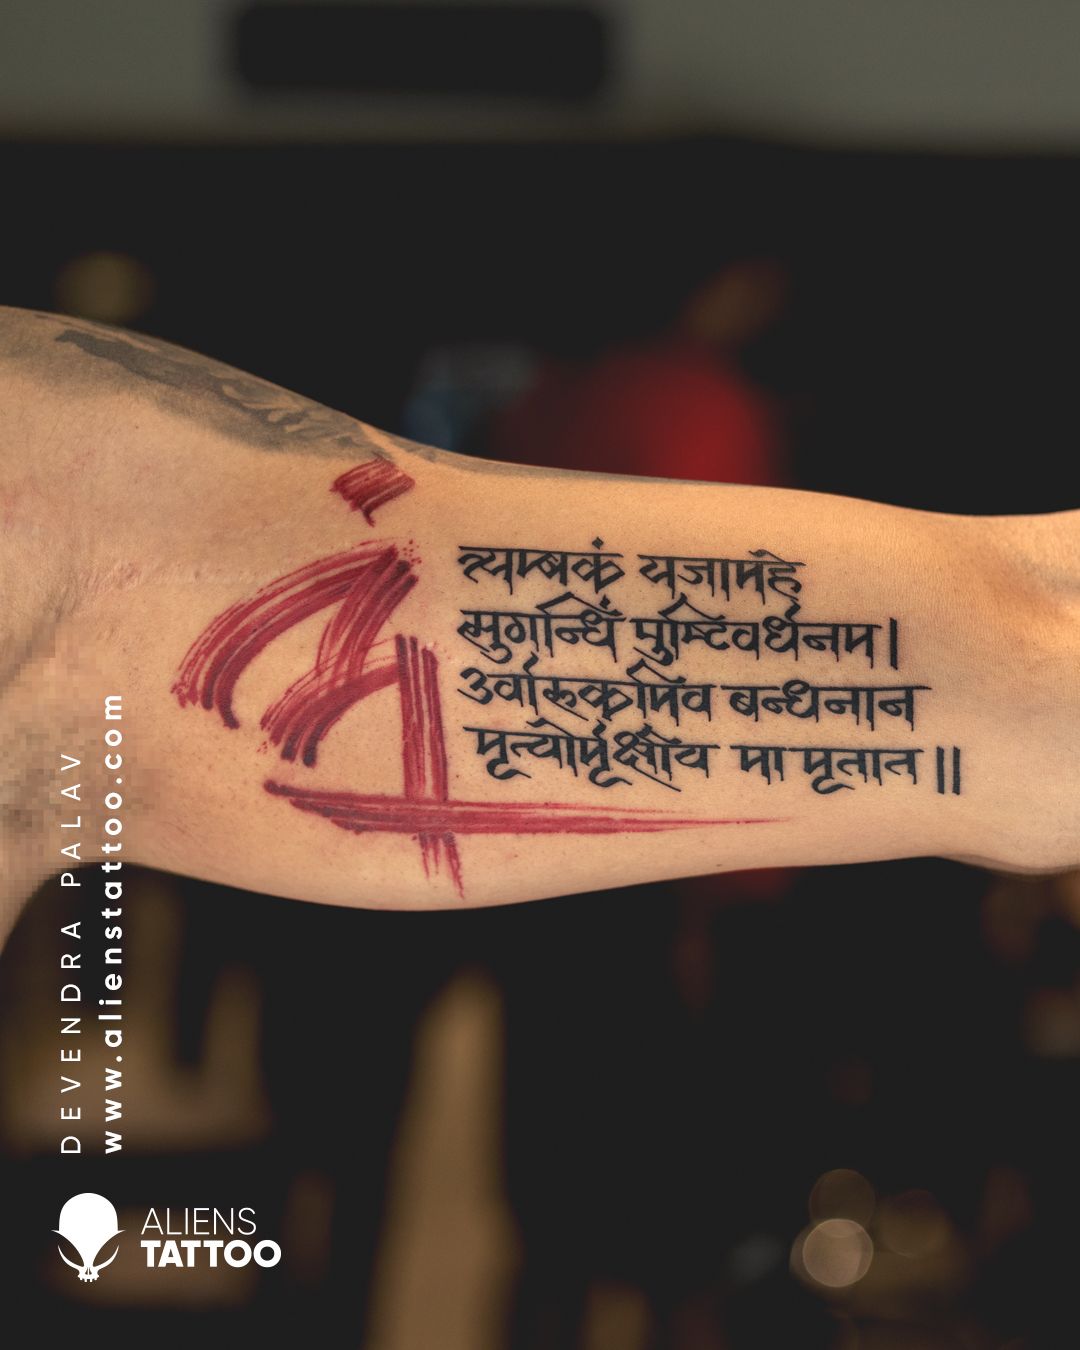 Trishul tattoo with mahamrityunjay mantra by Samarveera2008 on DeviantArt